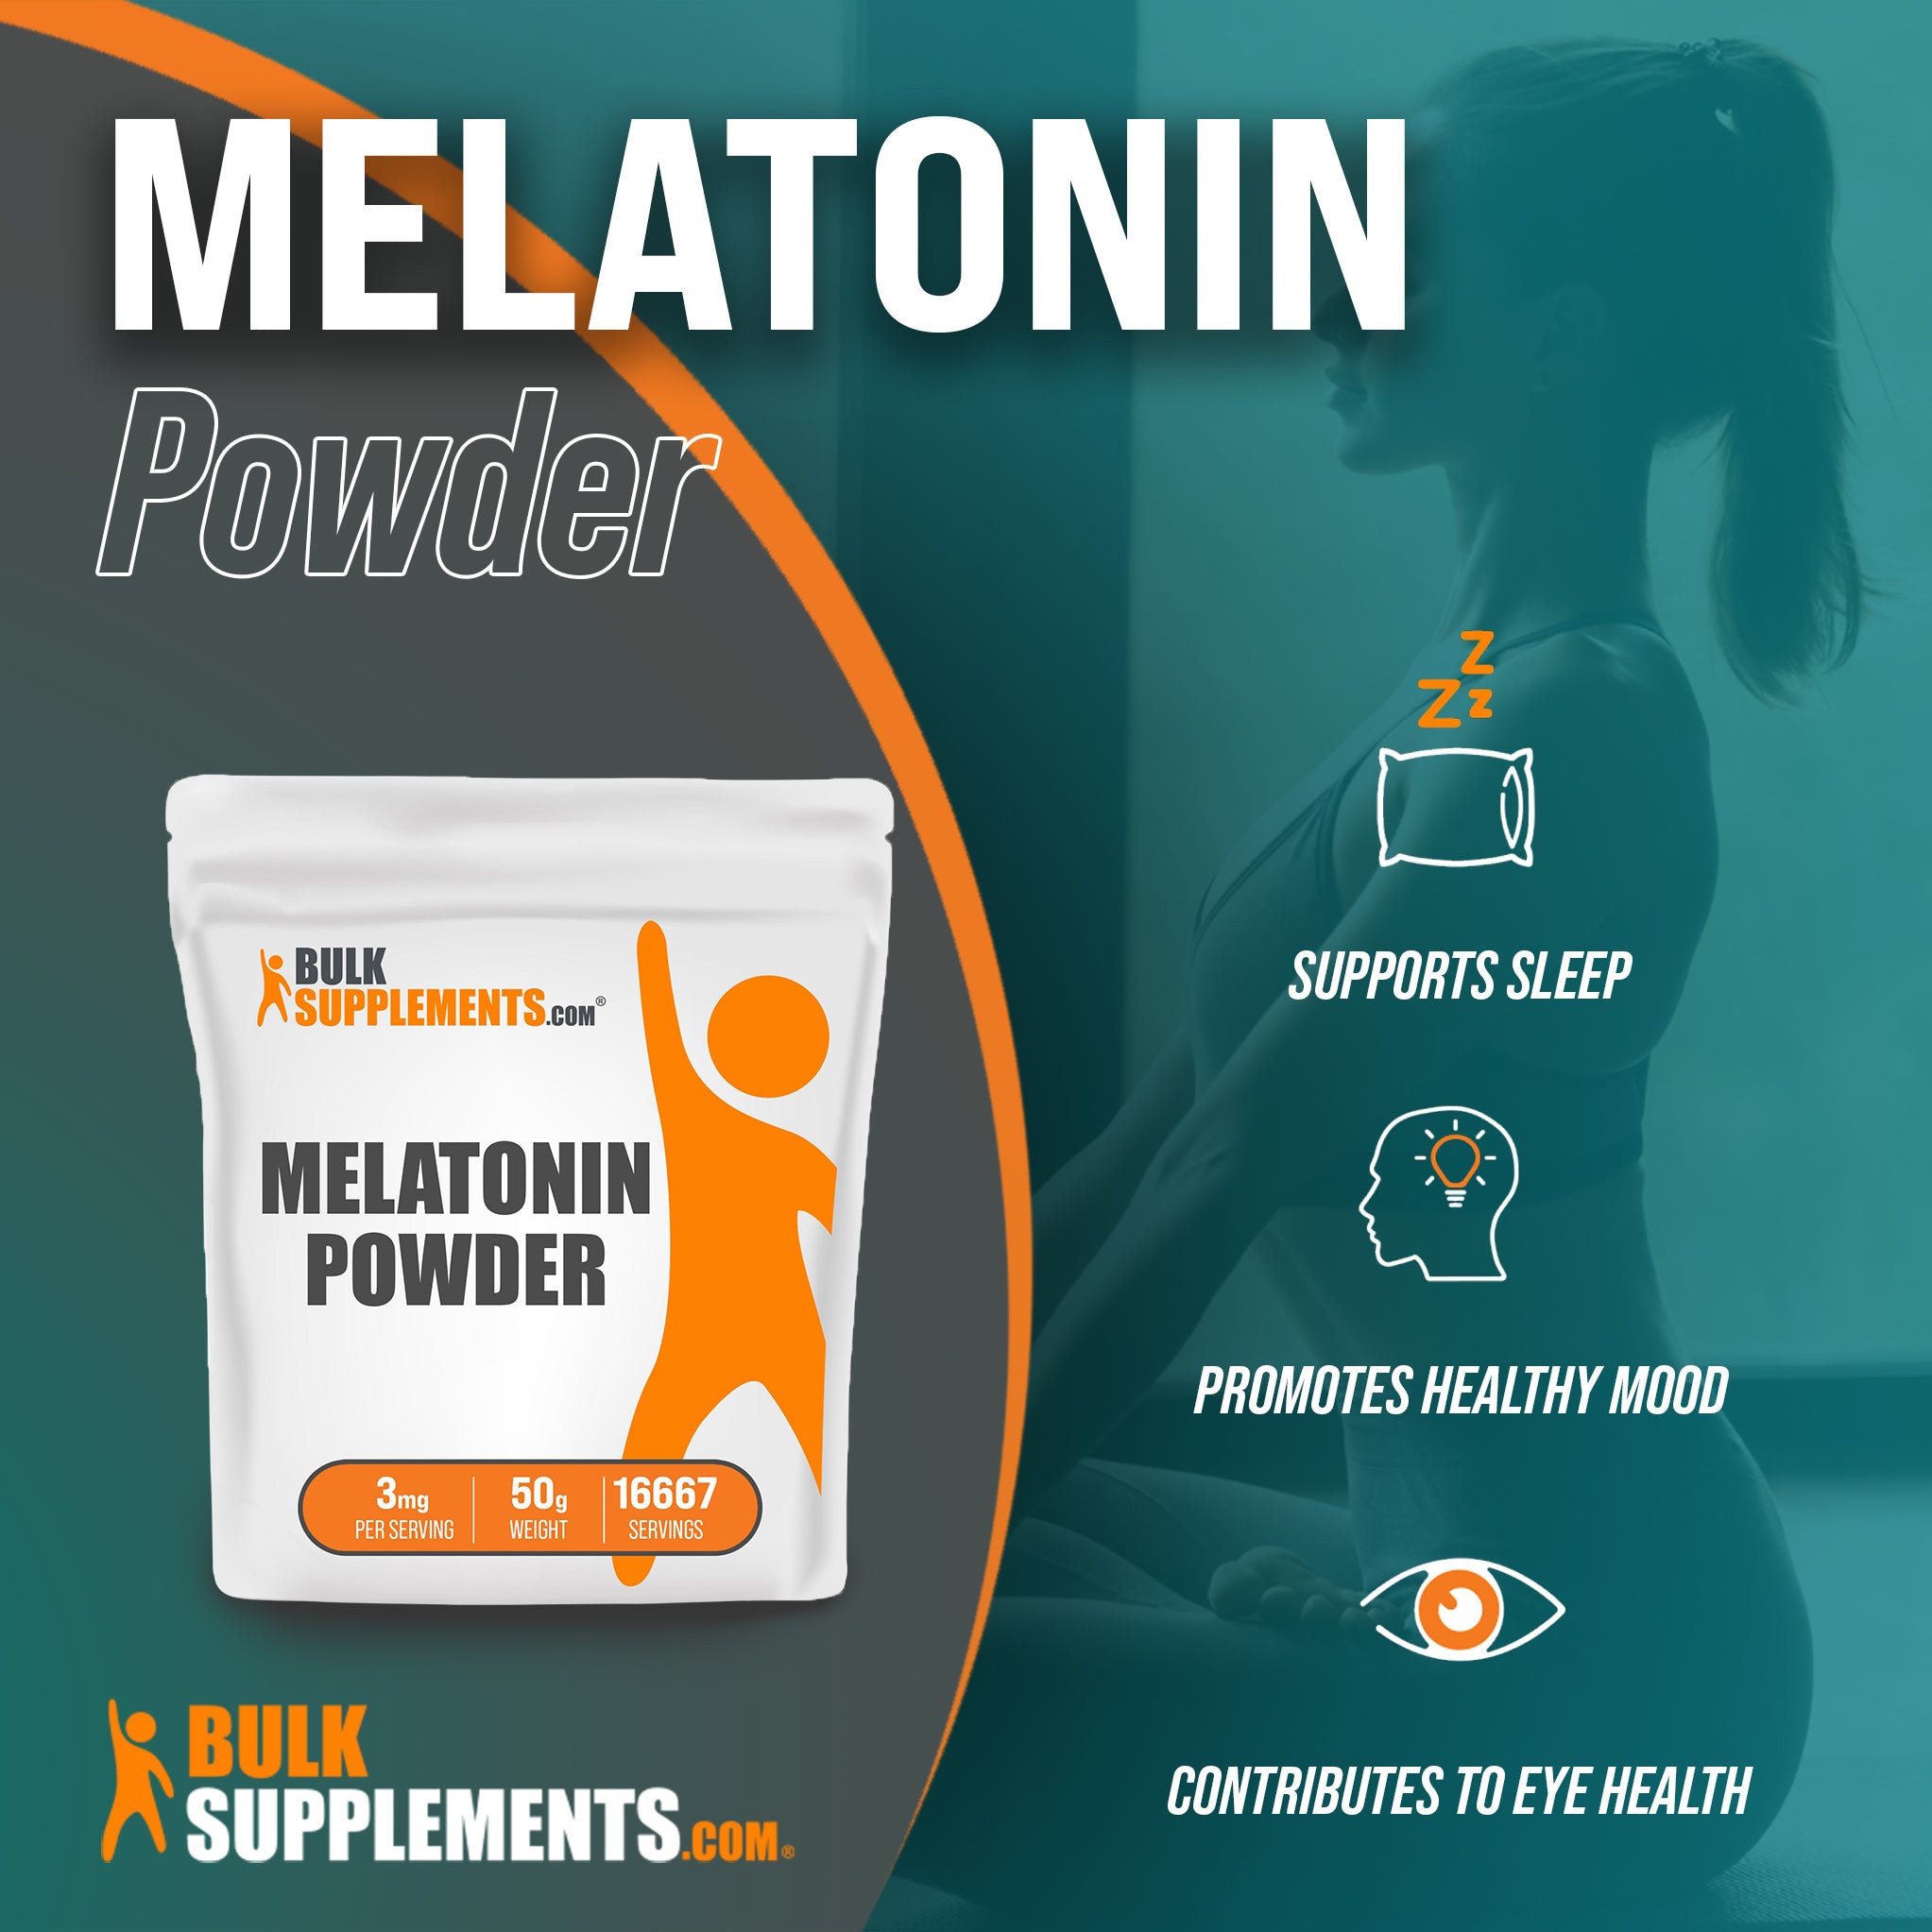 Benefits of Melatonin: supports sleep, promotes healthy mood, contributes healthy mood